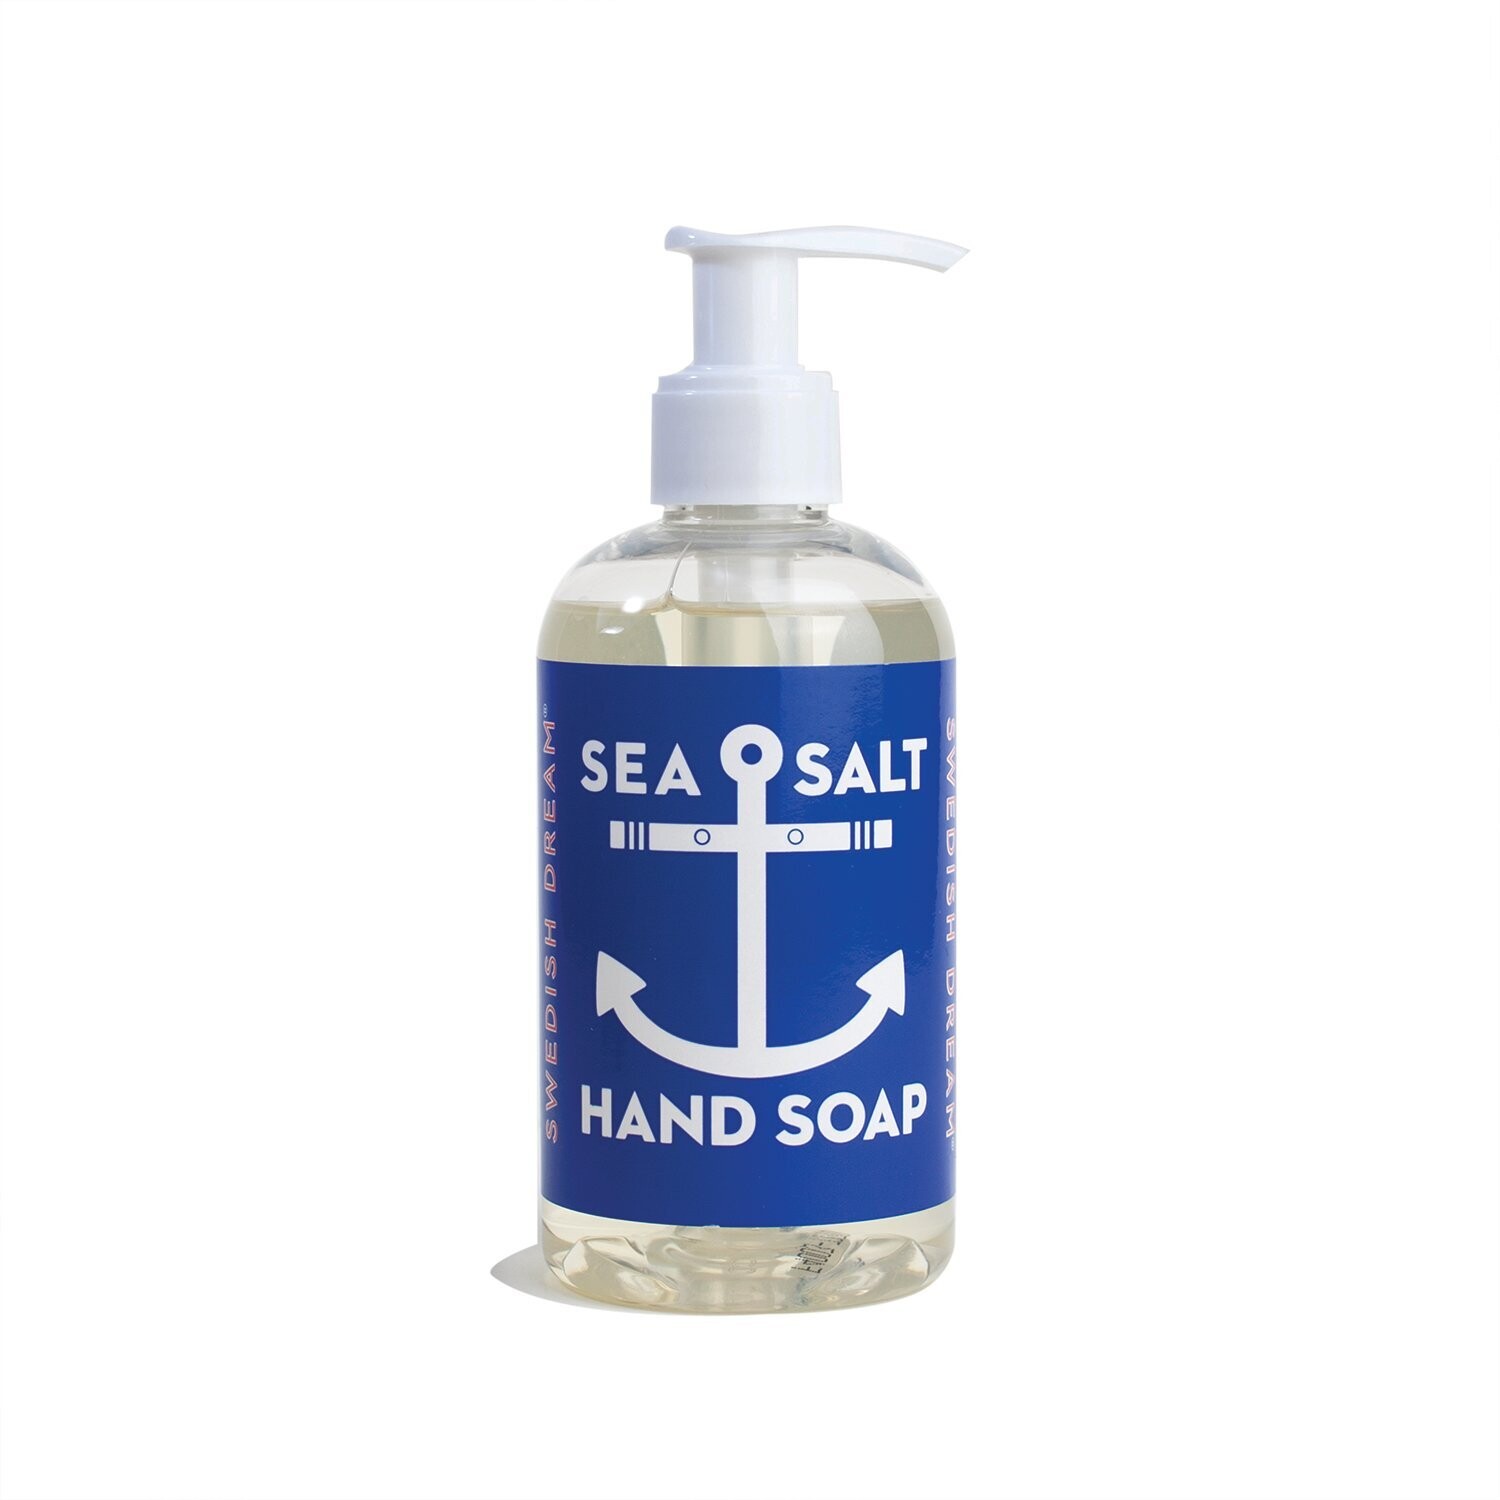 Kalastyle Swedish Dream Sea Salt Hand Soap